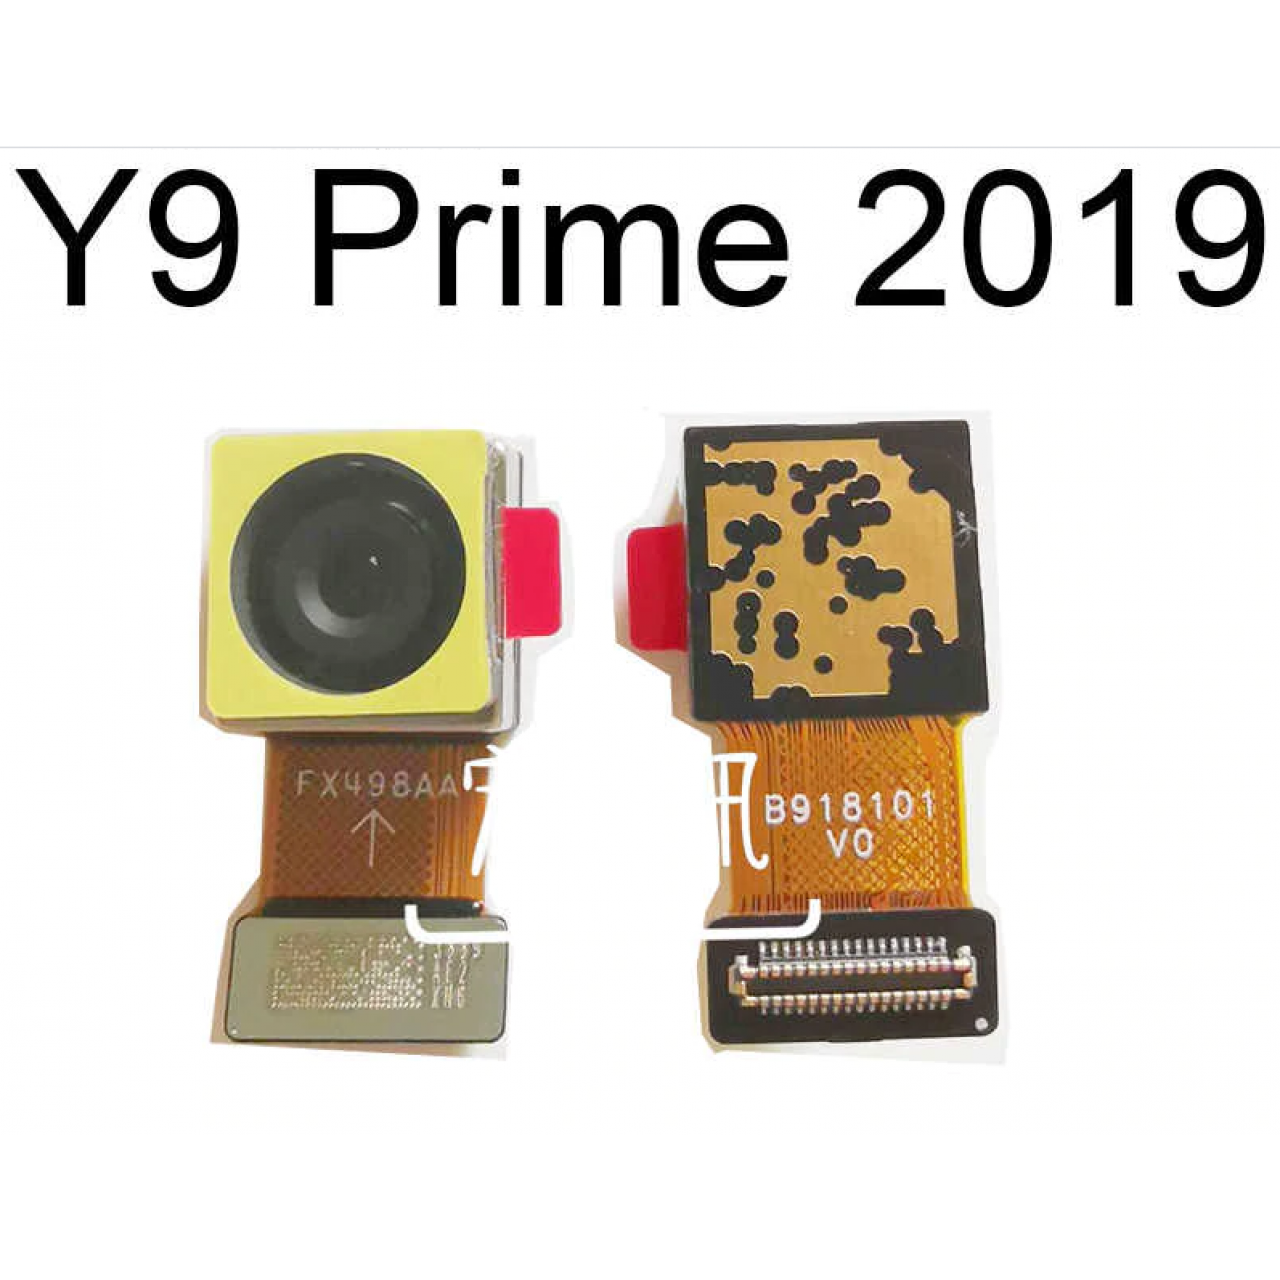 Huawei Y9 Prime 2019 STK-L21 Arka Kamera Back Camera